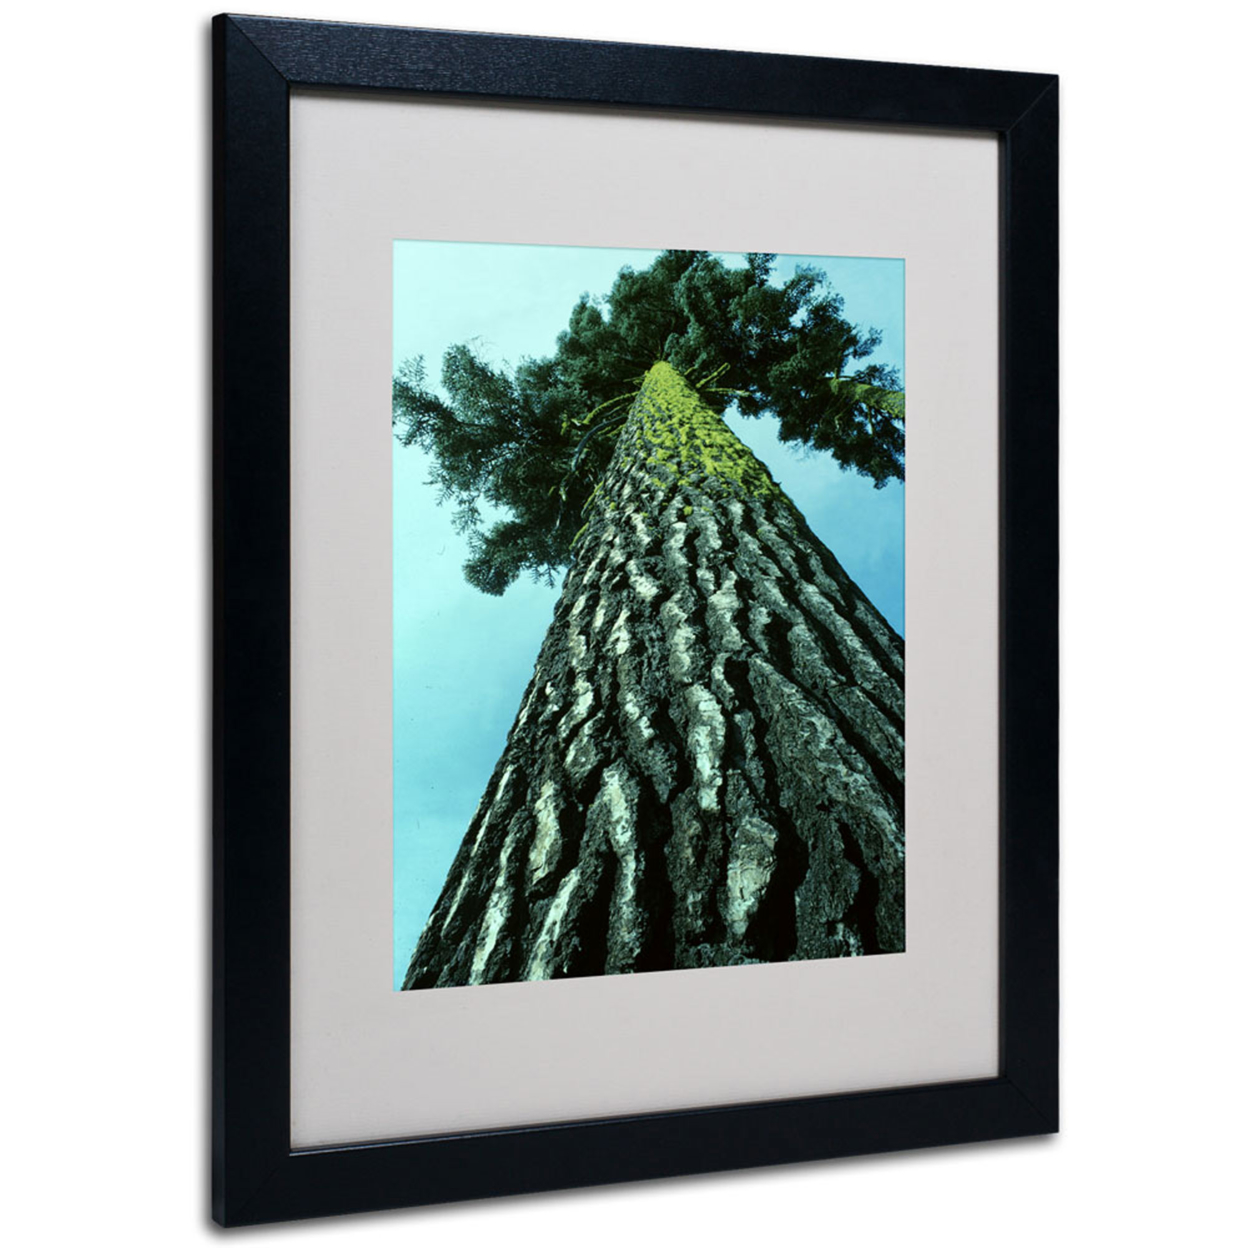 Kurt Shaffer 'A Tree Of Life' Black Wooden Framed Art 18 X 22 Inches